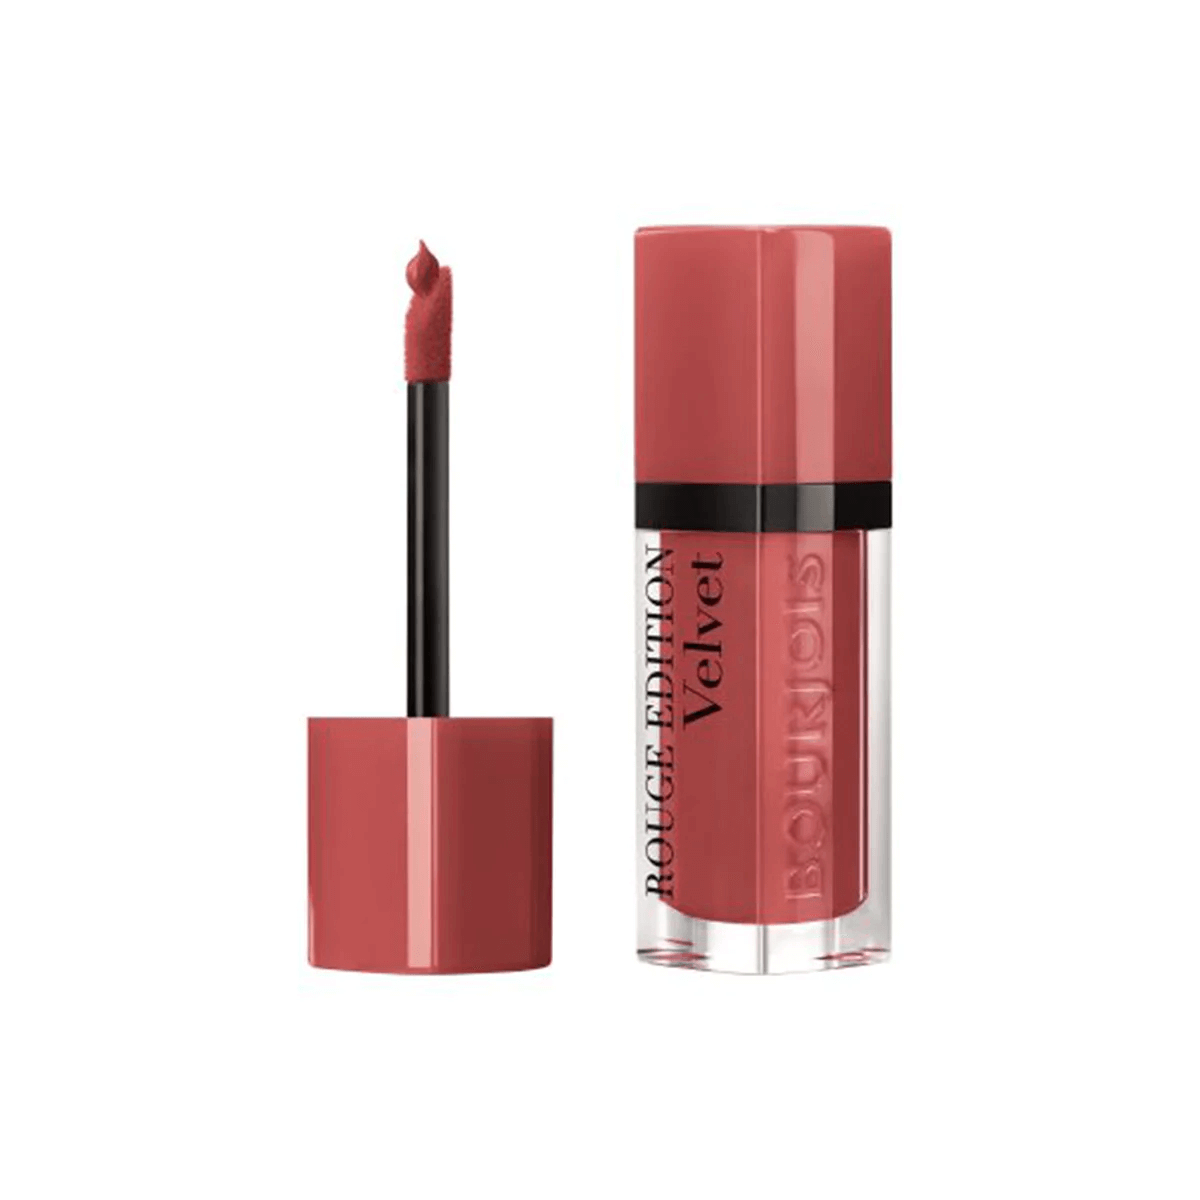 Shop Bourjois Rouge Edition Velvet Liquid Lipstick Online in Pakistan - ColorshowPk 